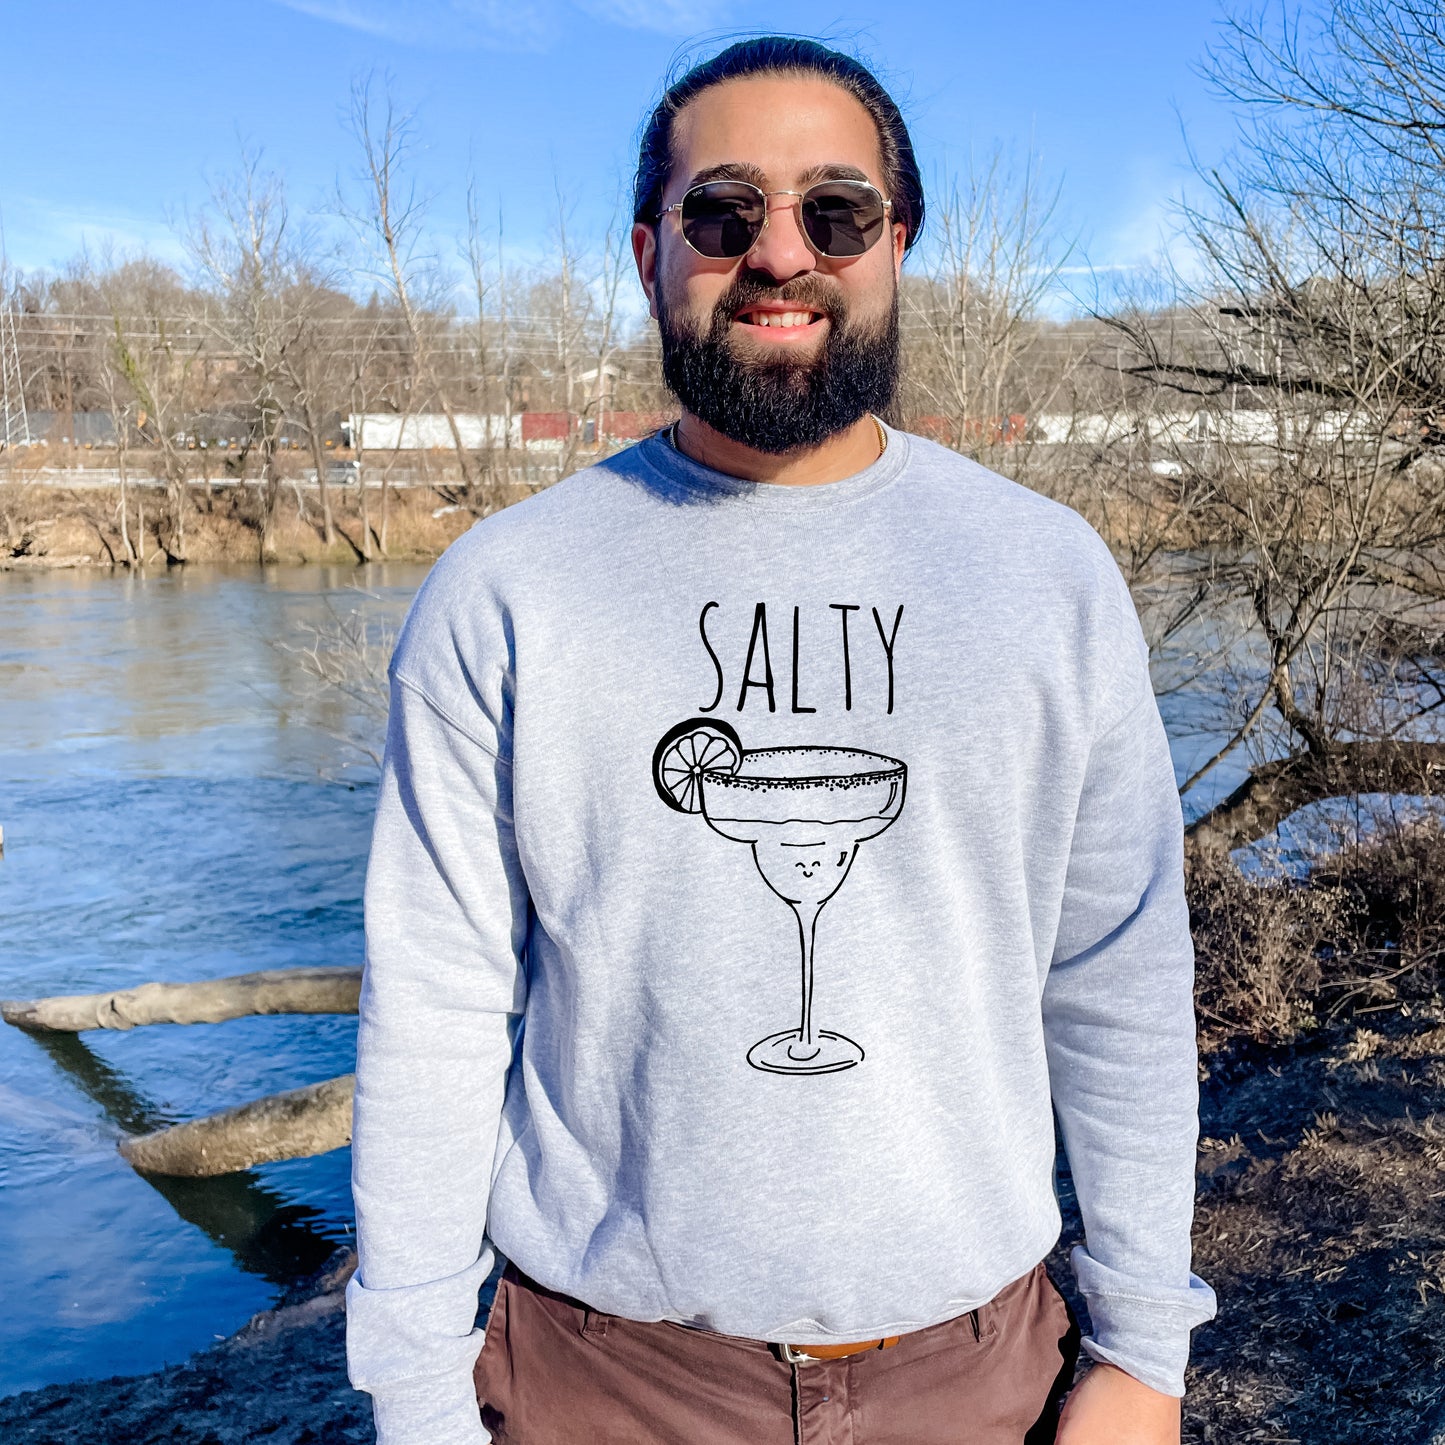 Salty (Margarita) - Unisex Sweatshirt - Heather Gray or Dusty Blue